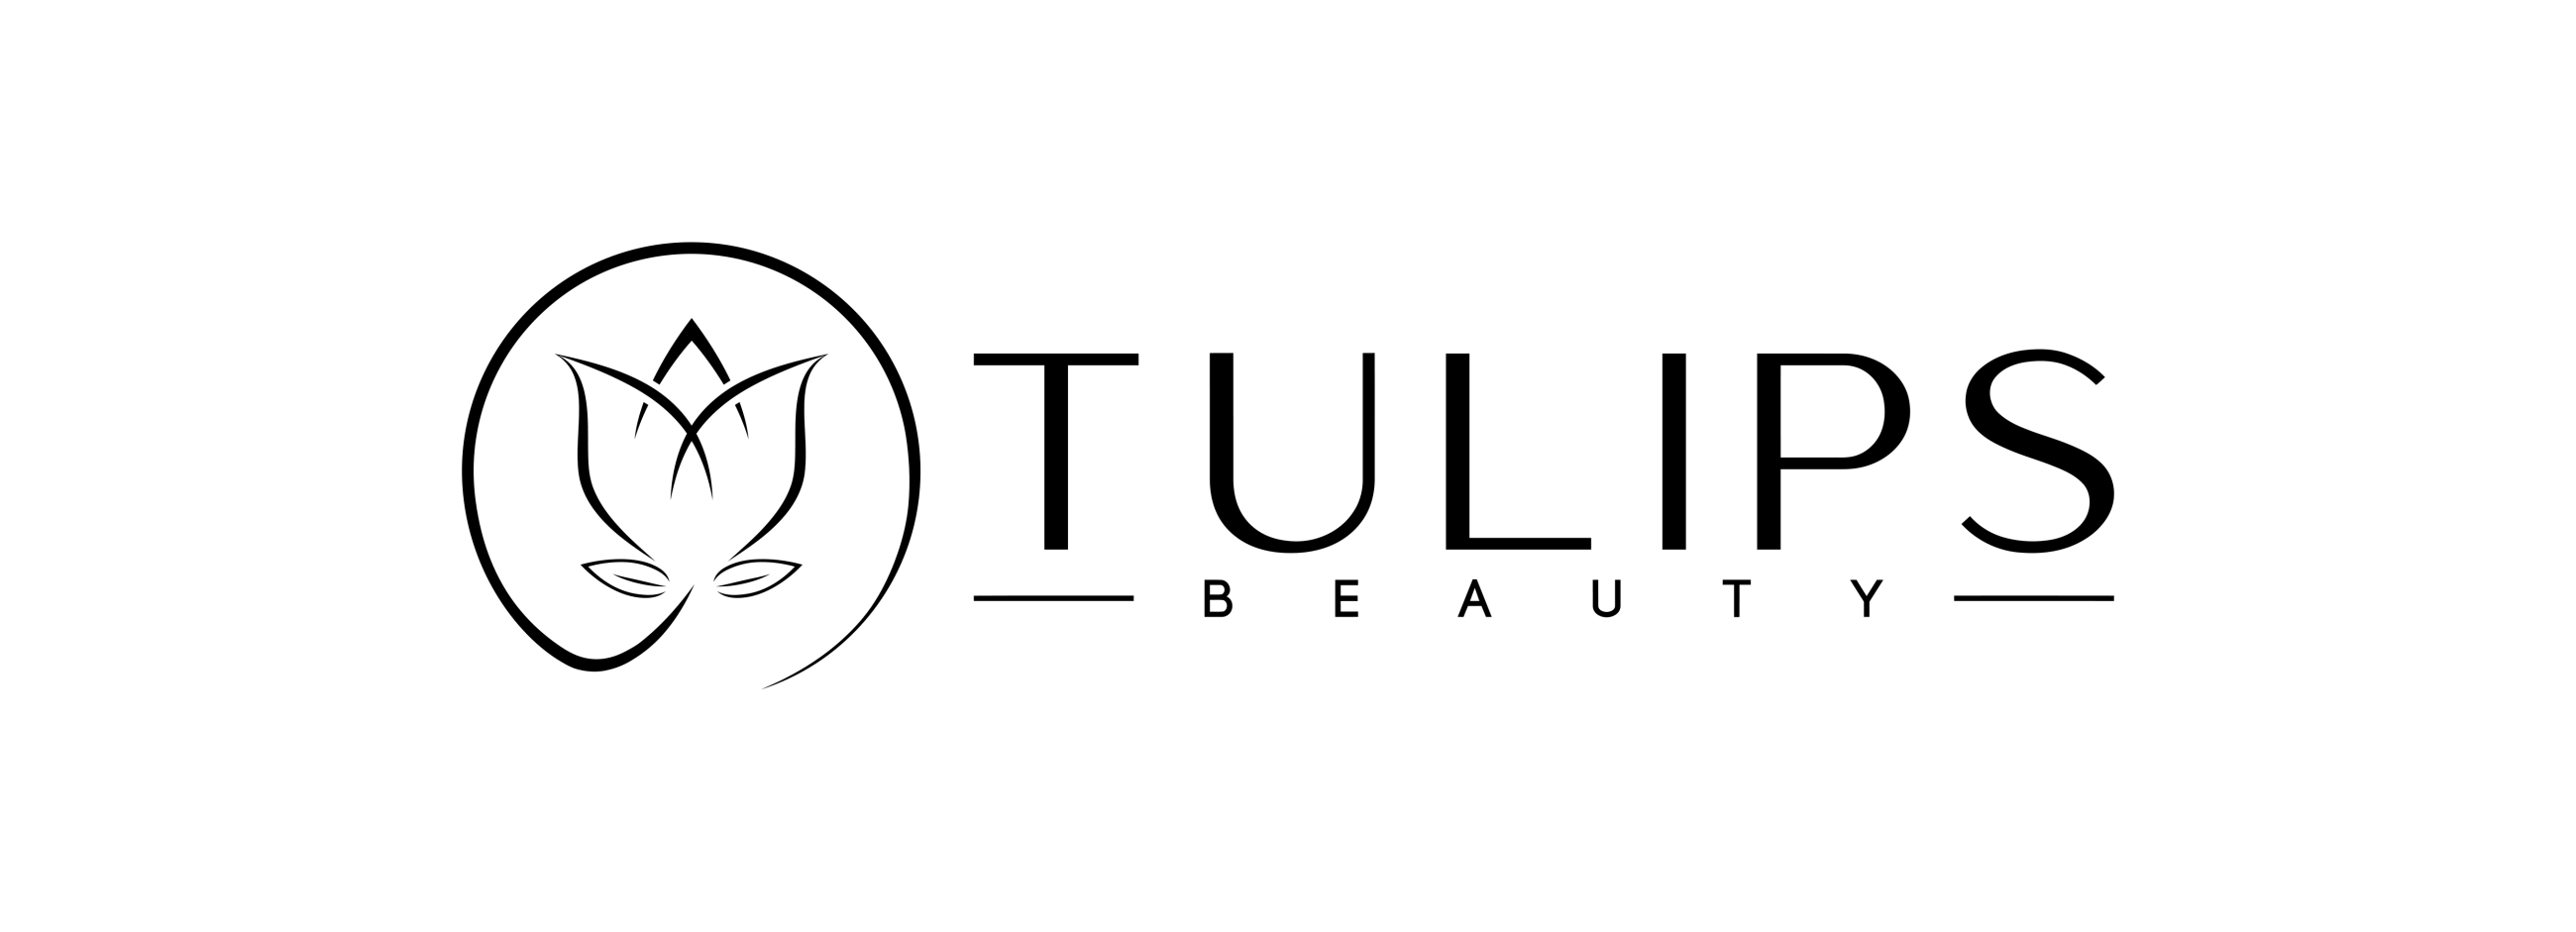 Tulips logo